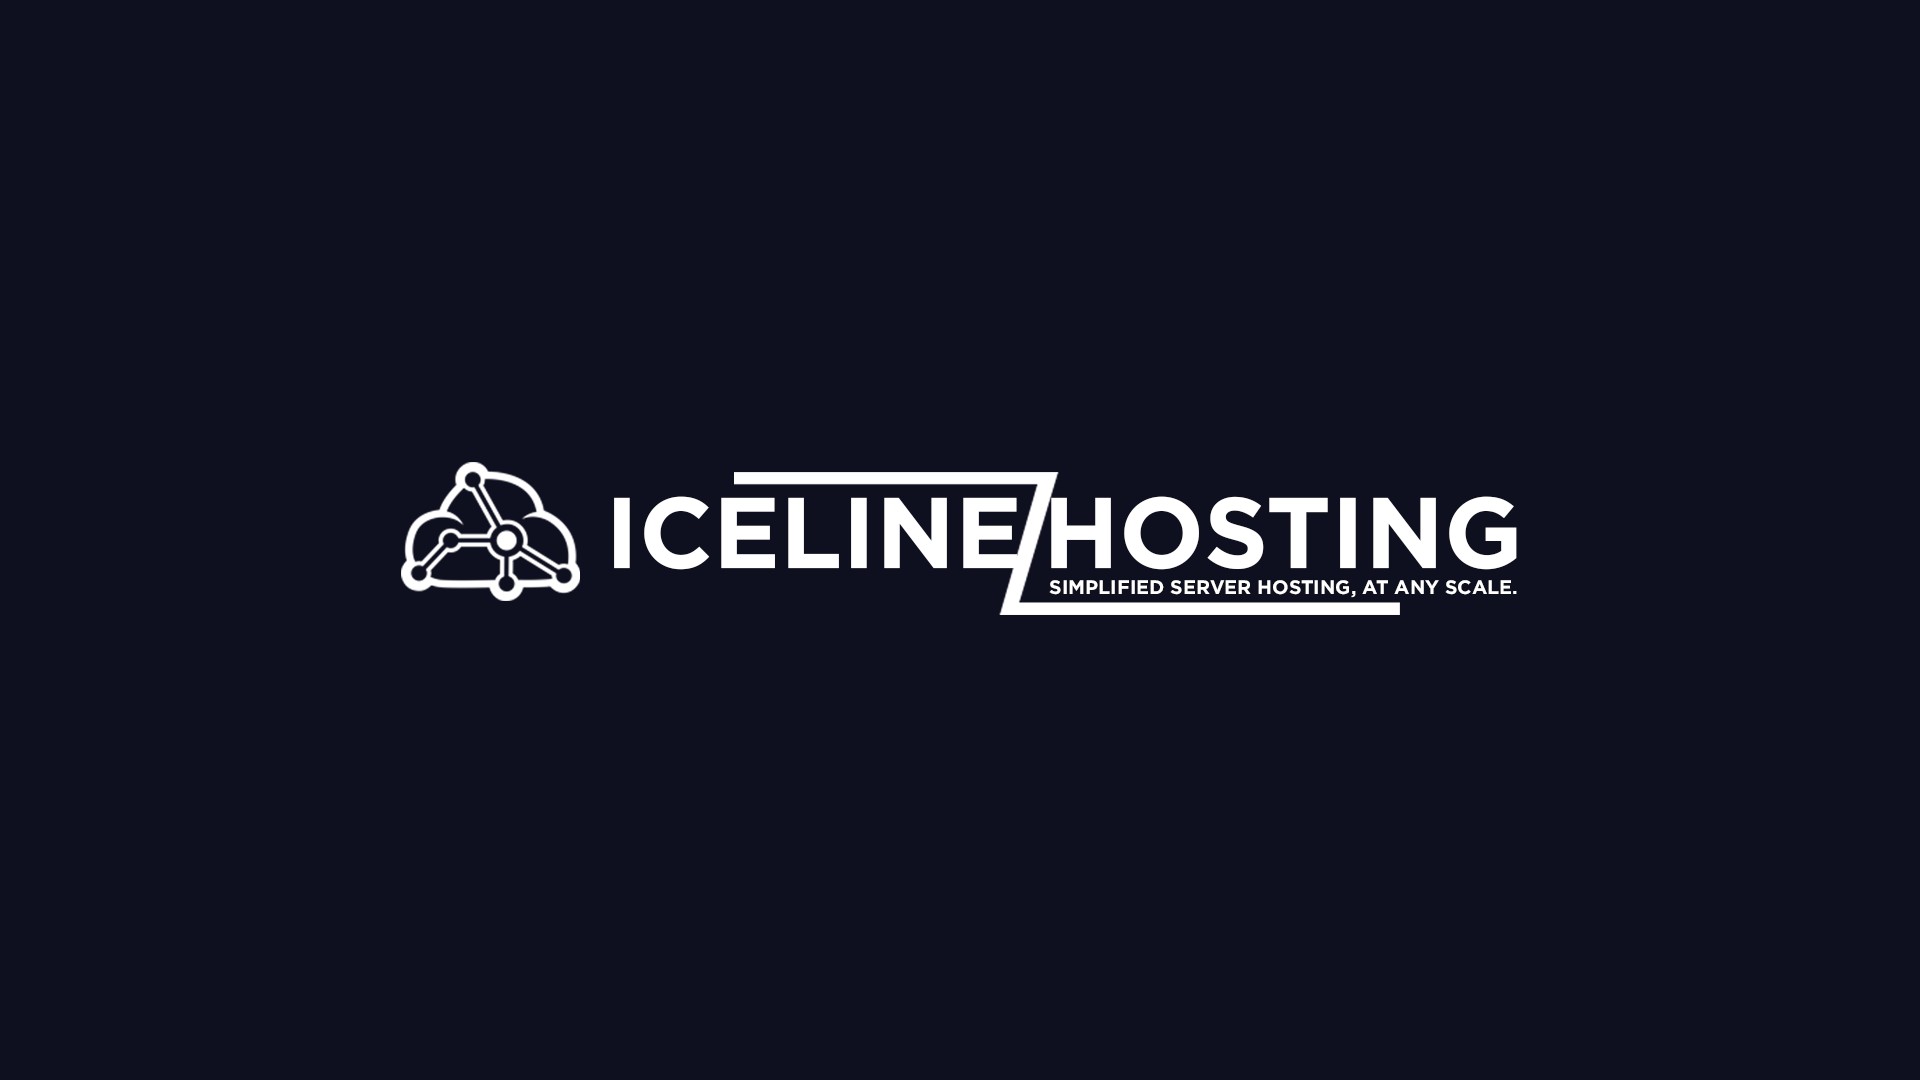 Iceline Hosting logo